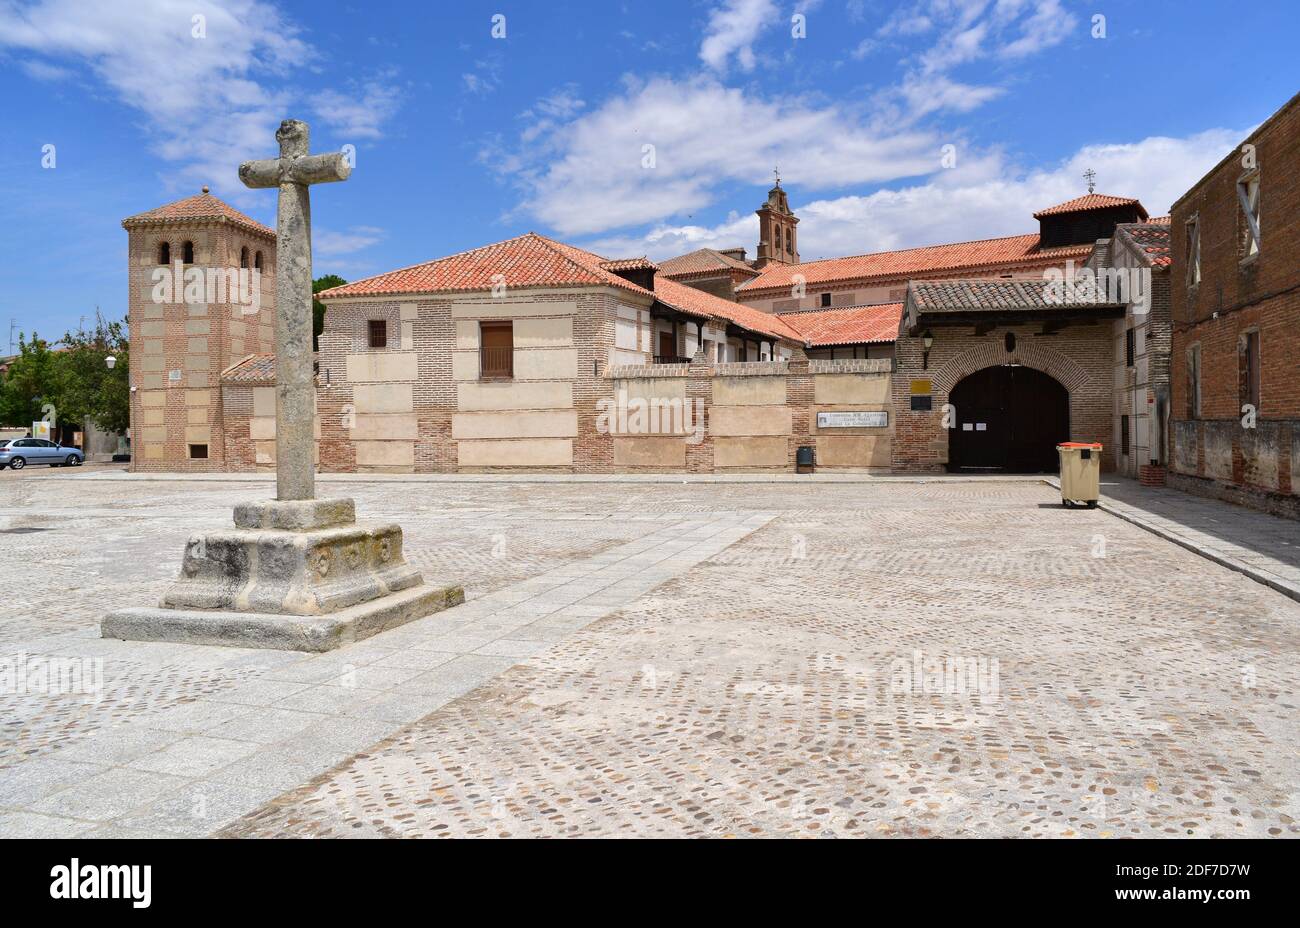 Madrigal de las Altas Torres, Plaza del Cristo with Juan II Palace birthplace of Isabel la Catolica and Convento de las Madres Agustina at present. Stock Photo